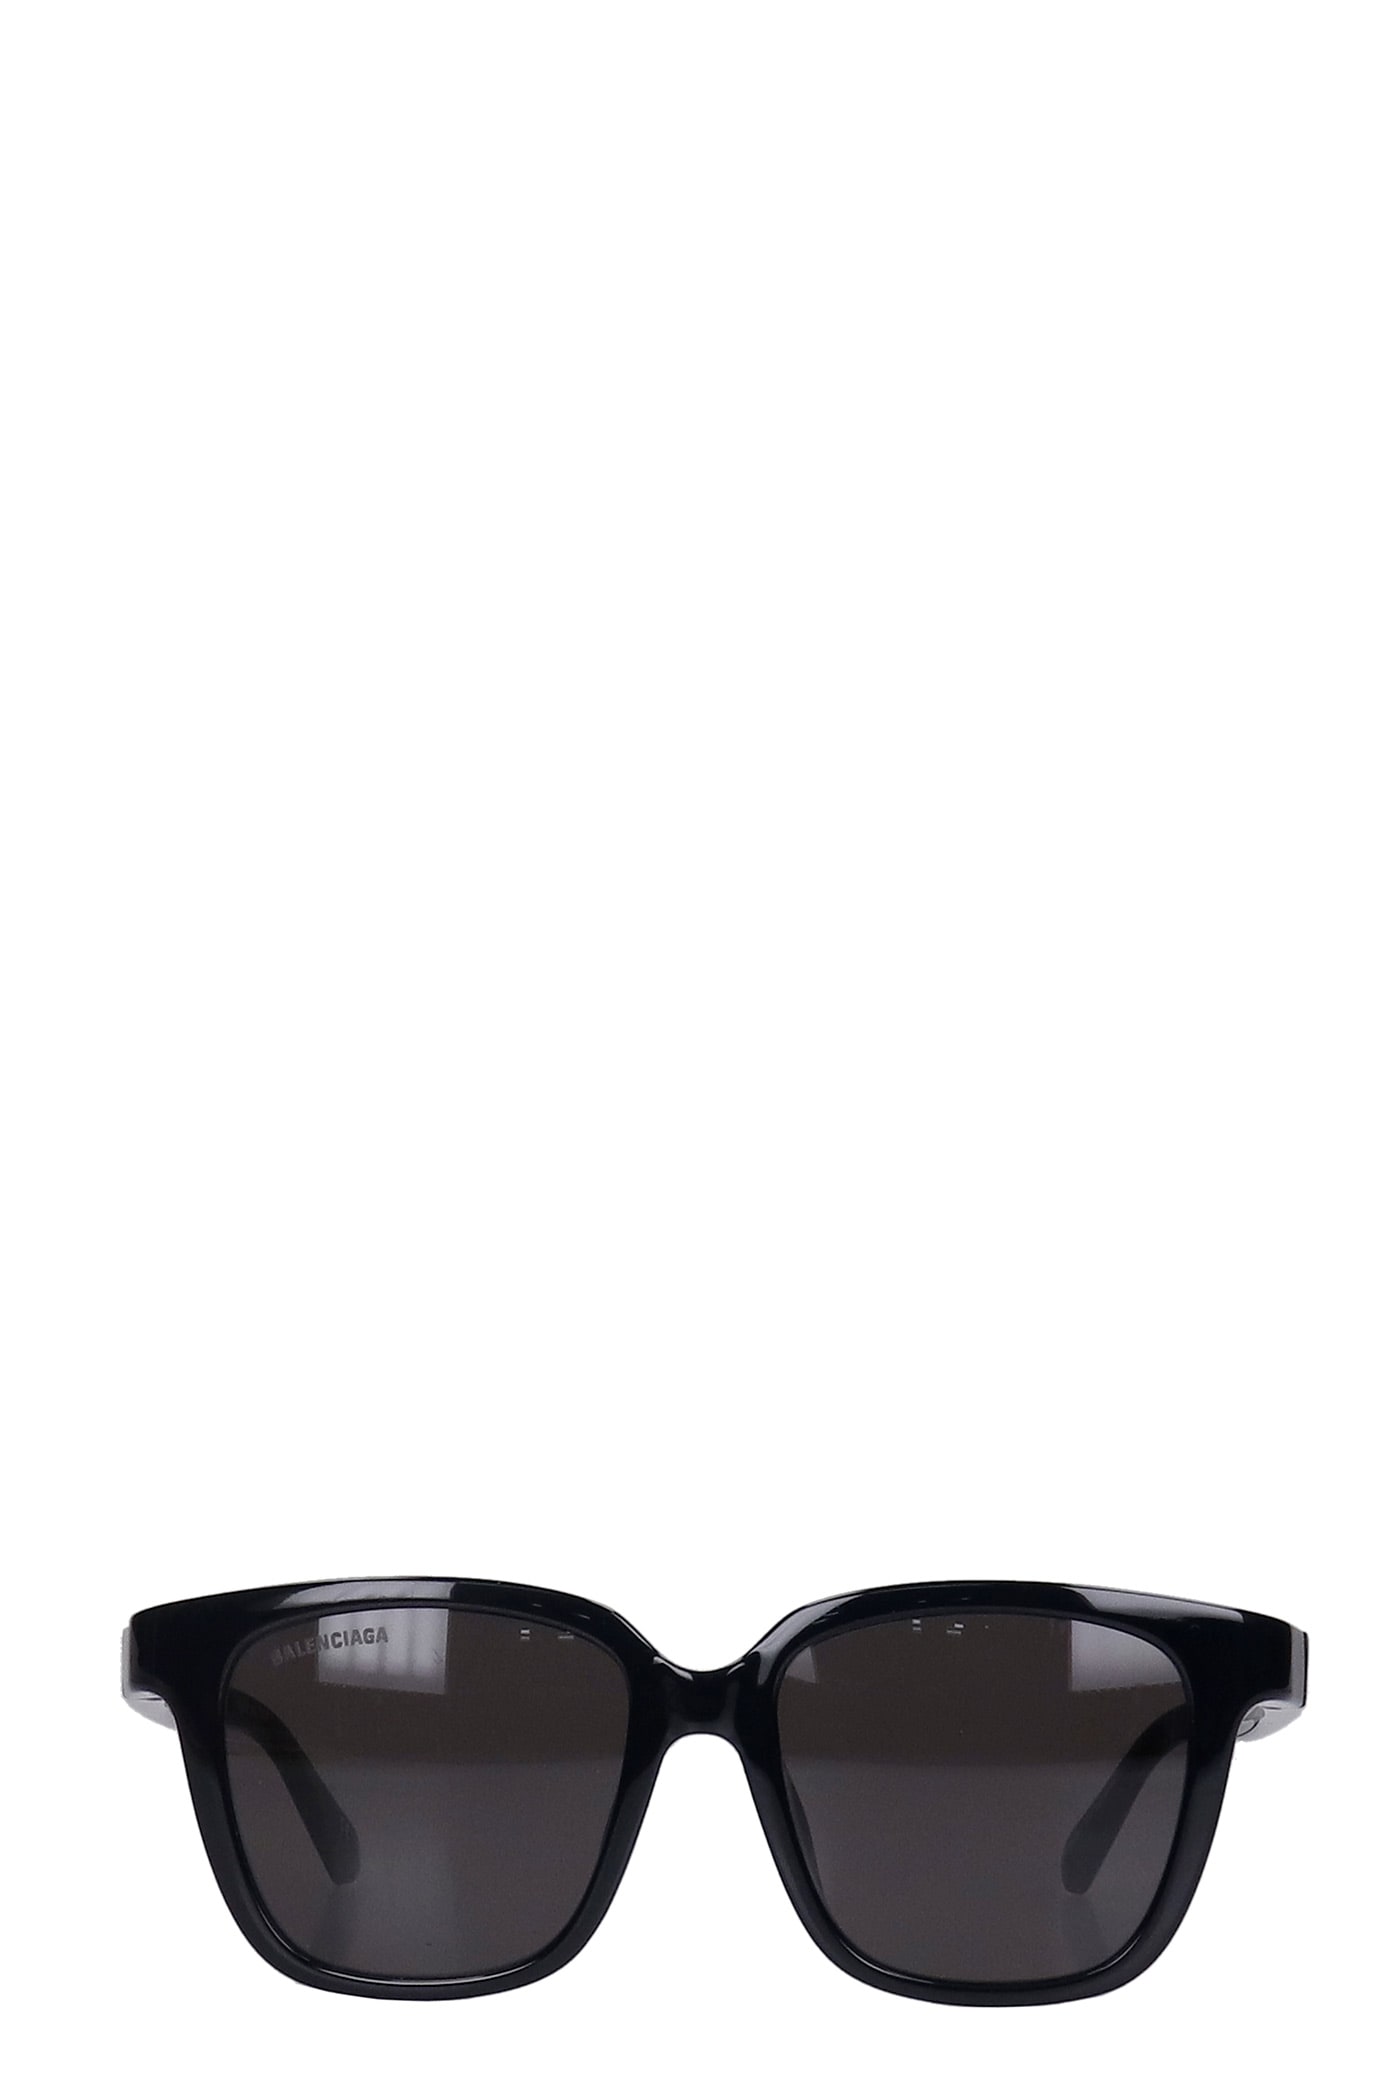 Balenciaga Sunglasses In Black Acrylic